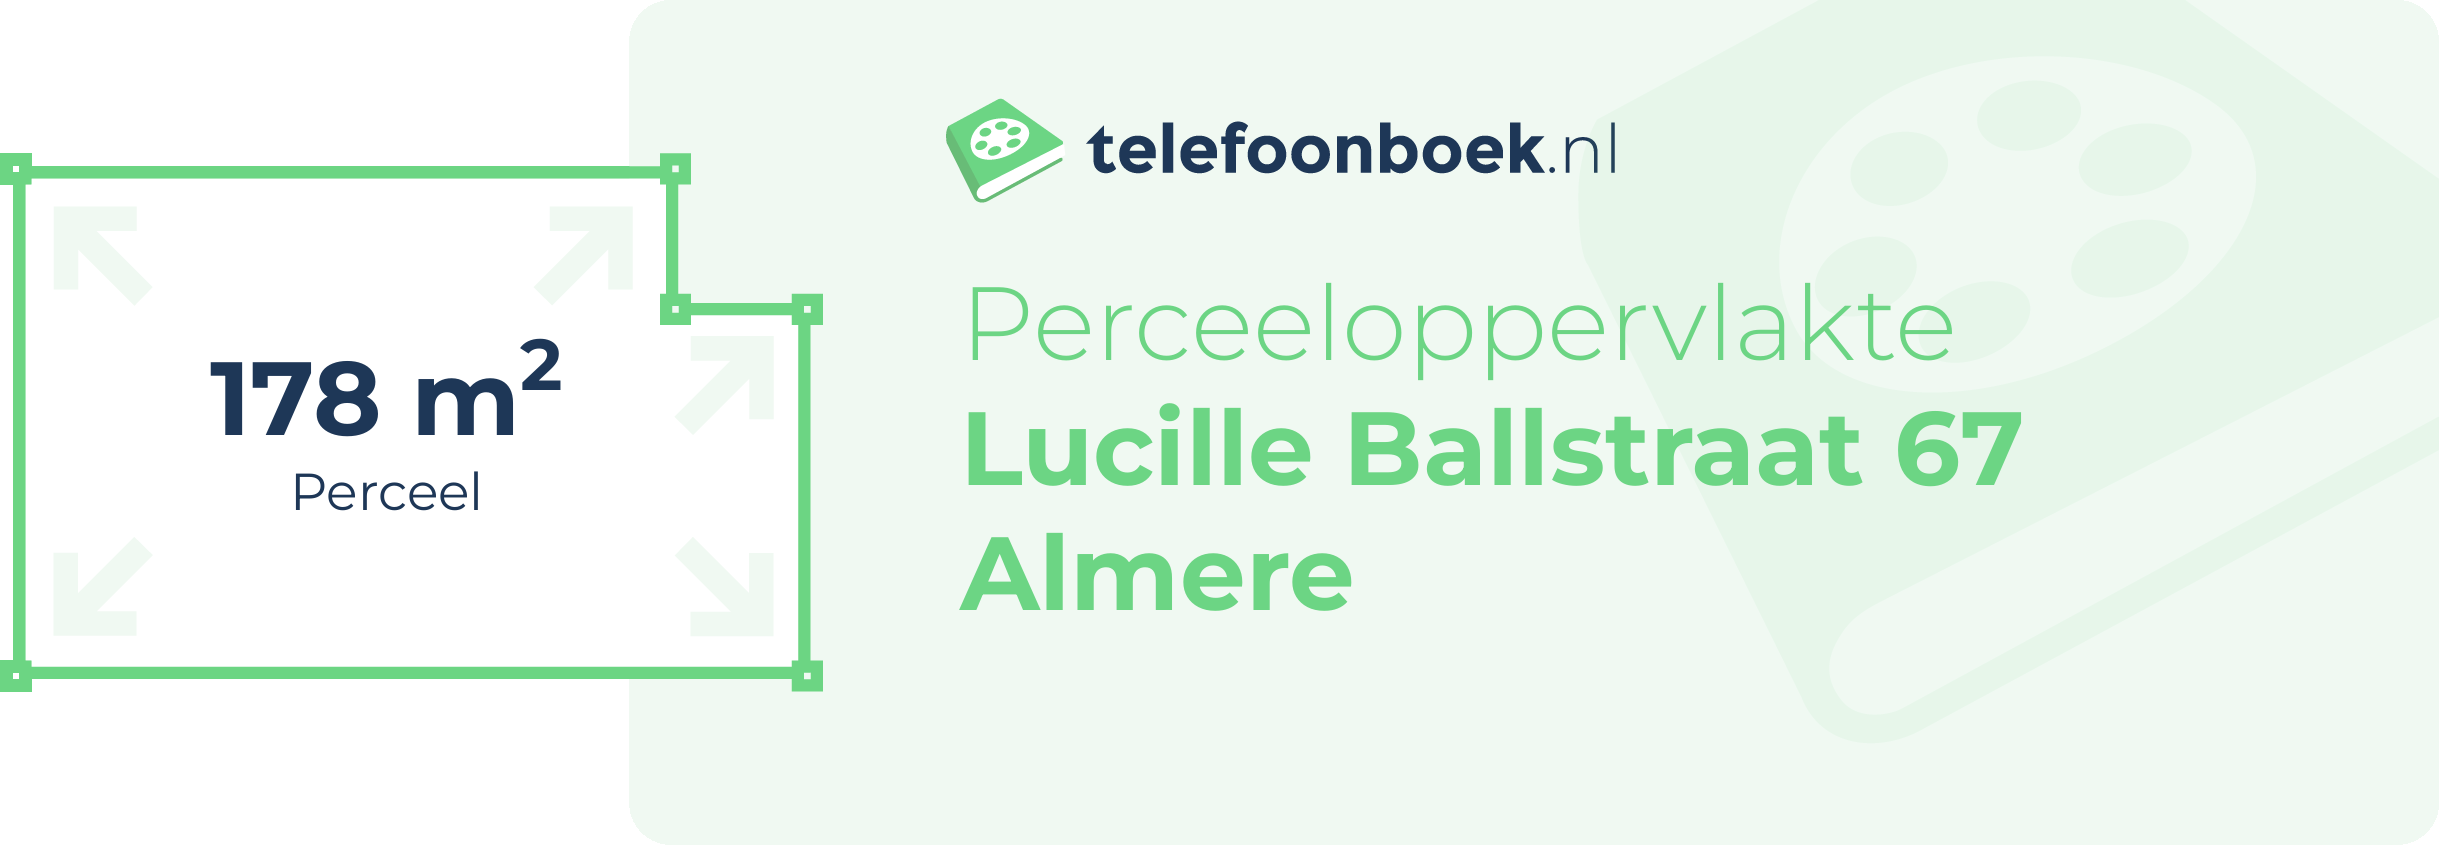 Perceeloppervlakte Lucille Ballstraat 67 Almere